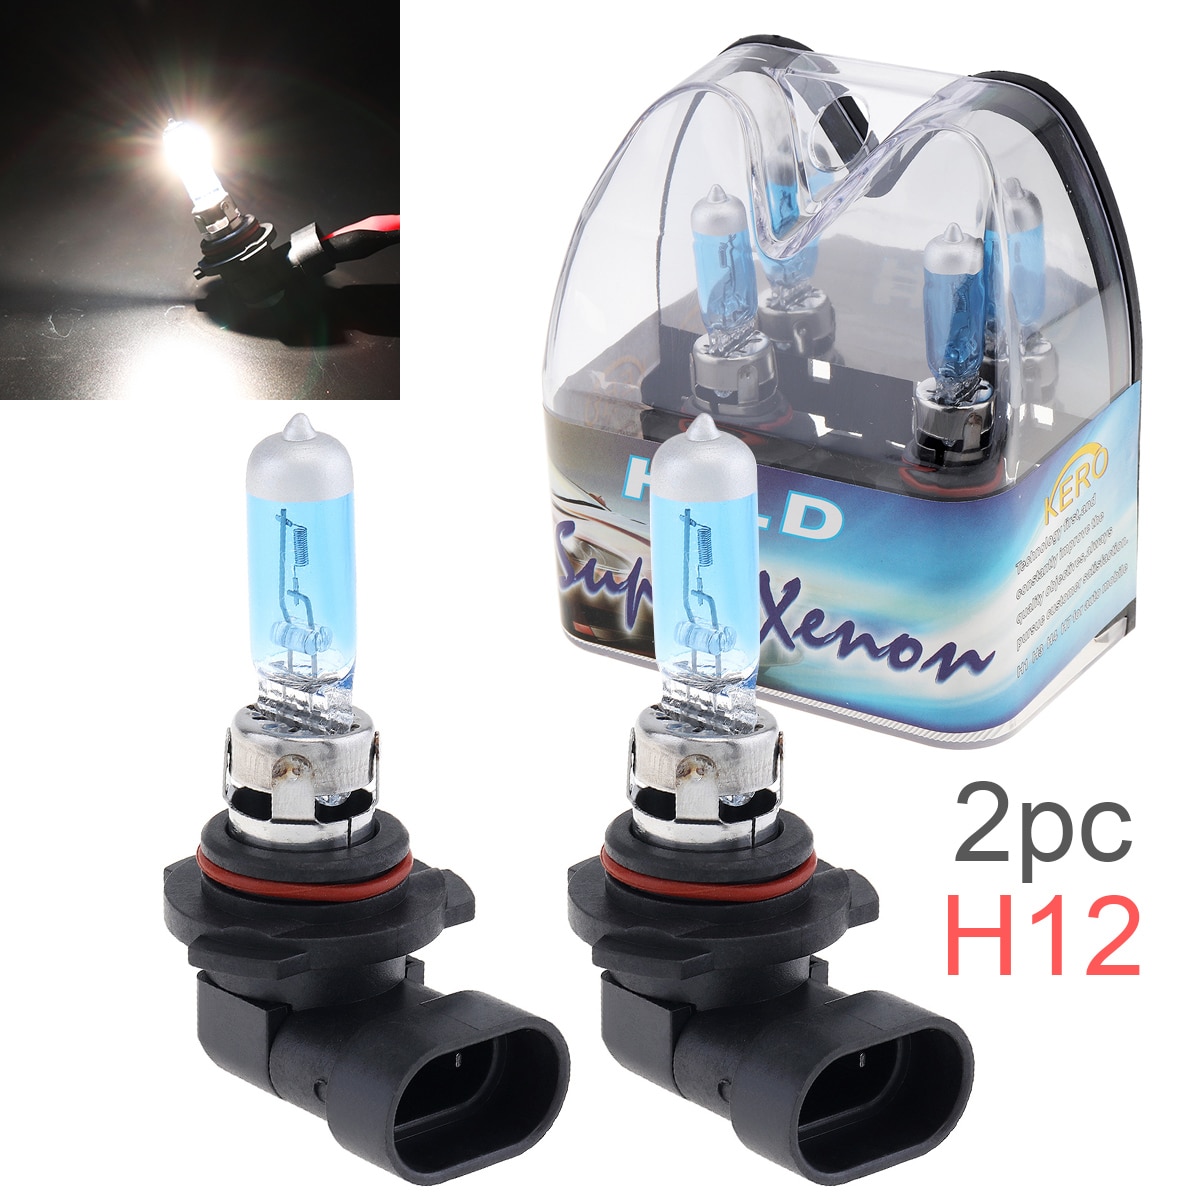 2 Stuks 12V H12 53W 6000K Wit Licht Super Bright Auto Xenon Halogeen Lamp Auto Koplamp mist Lamp Auto Koplamp